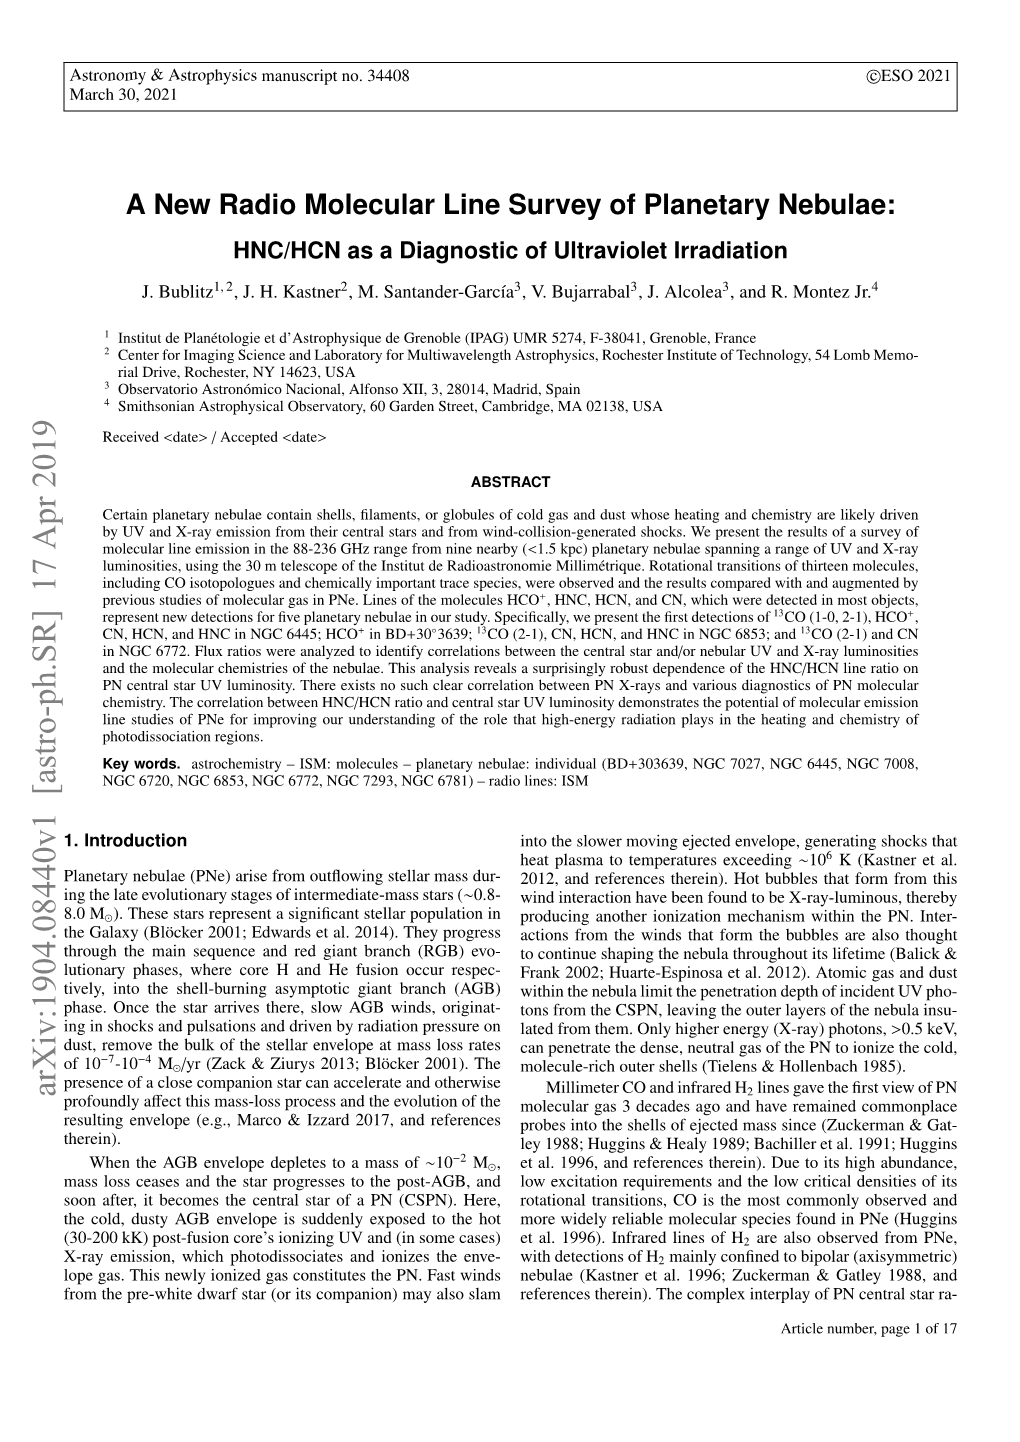 A New Radio Molecular Line Survey of Planetary Nebulae: HNC/HCN As a Diagnostic of Ultraviolet Irradiation